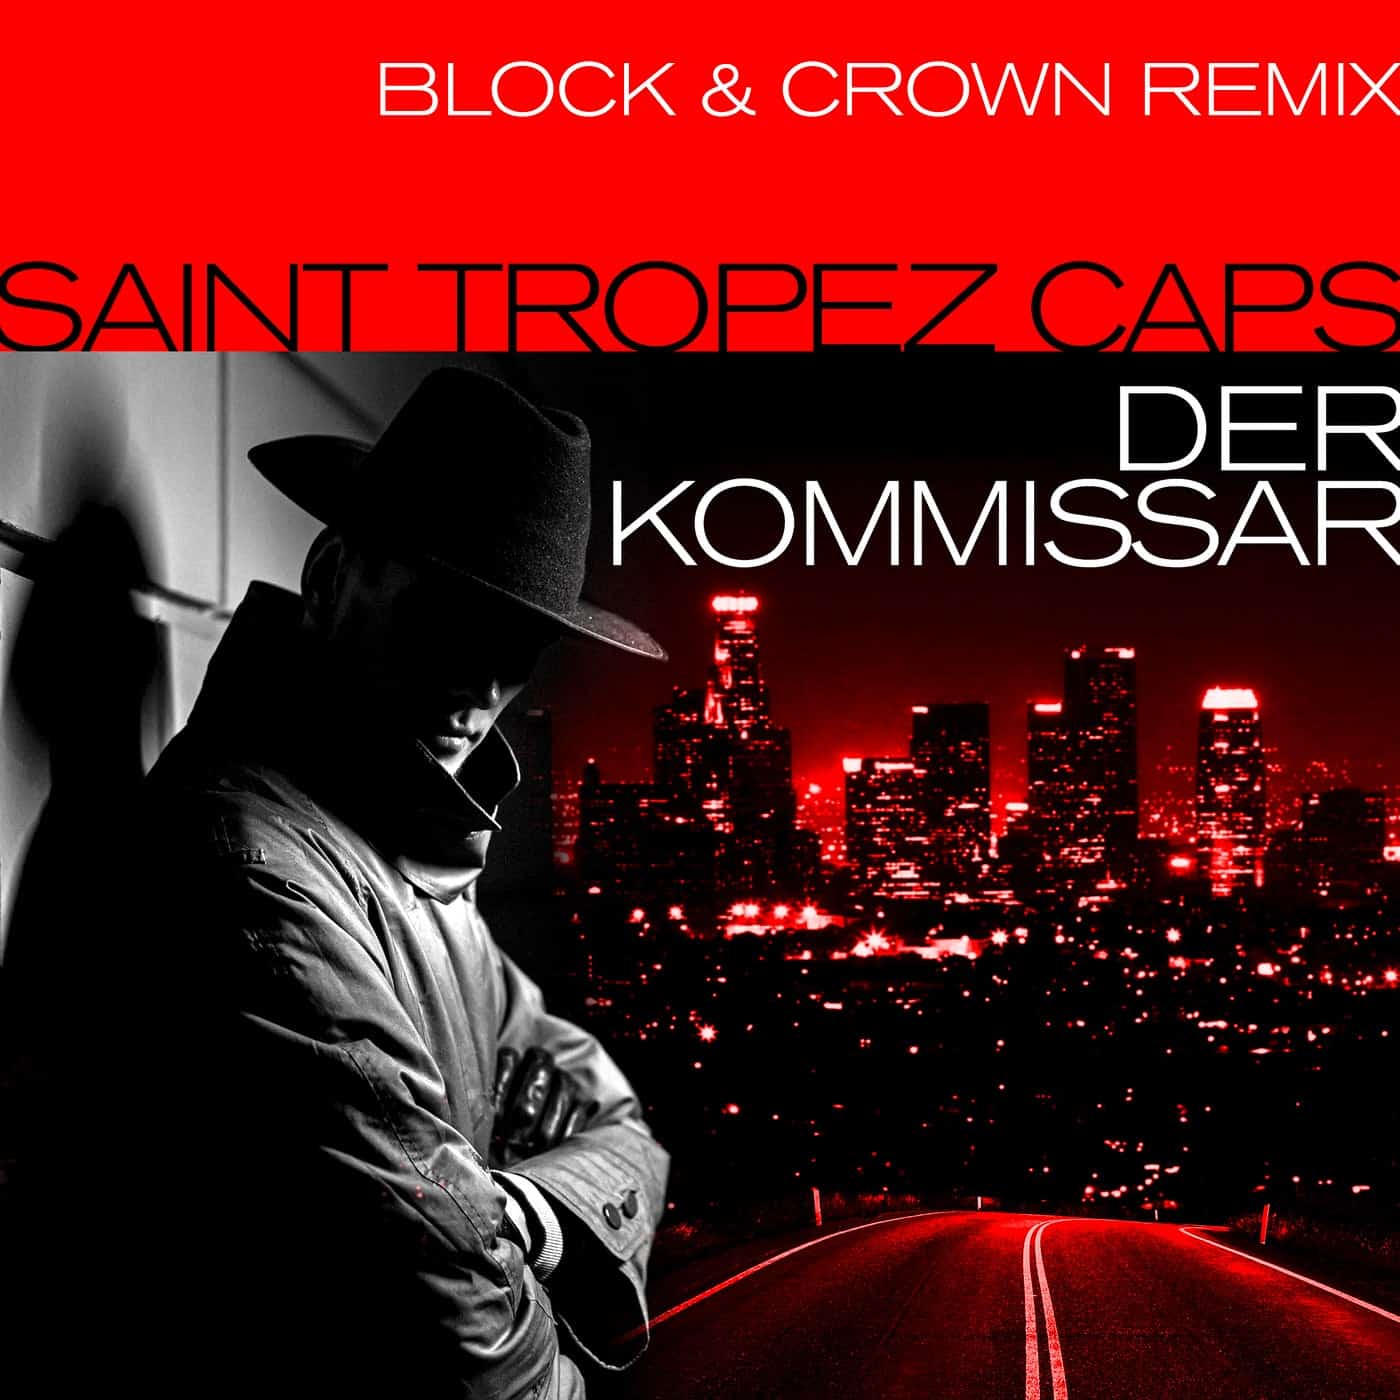 Download Saint Tropez Caps - Der Kommissar (Block & Crown Remix) on Electrobuzz